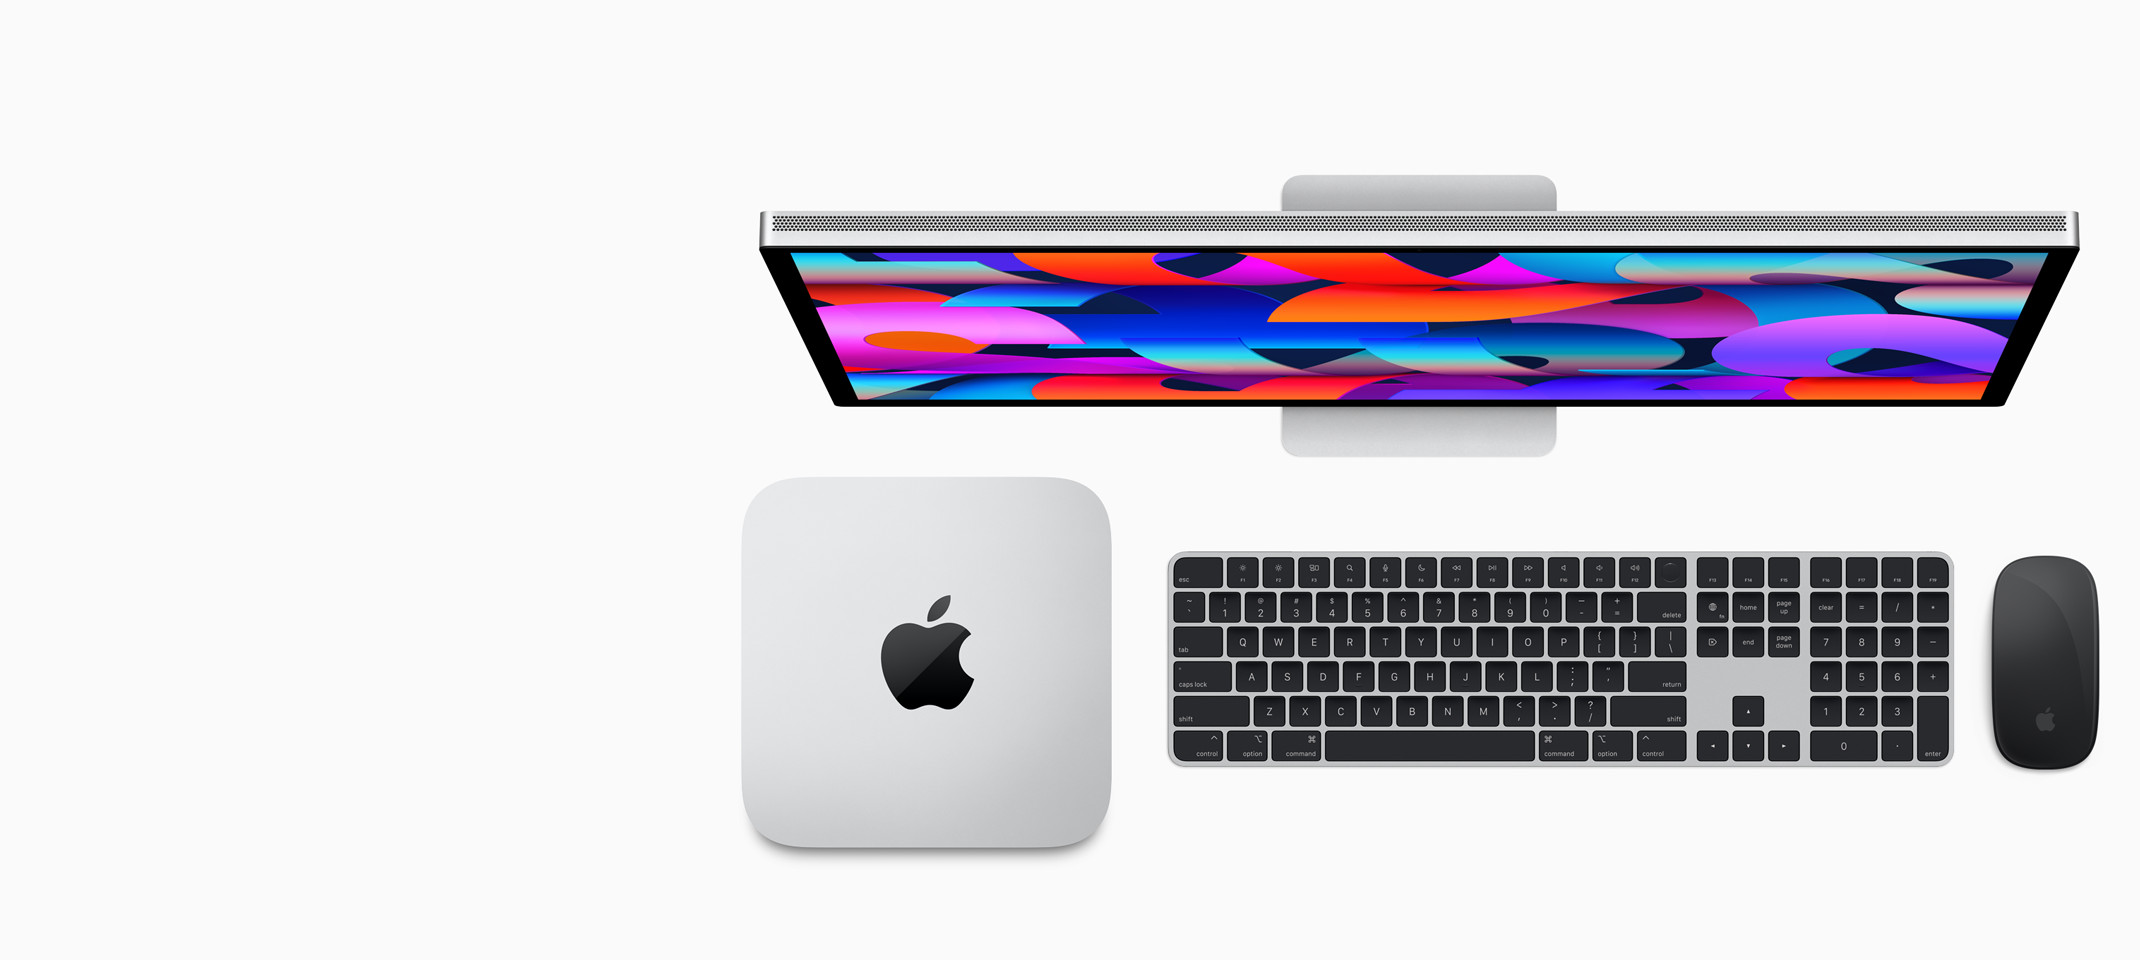 Studio Display, Mac Studio, Magic Keyboard với Touch ID và Numeric Keypad, và Magic Mouse